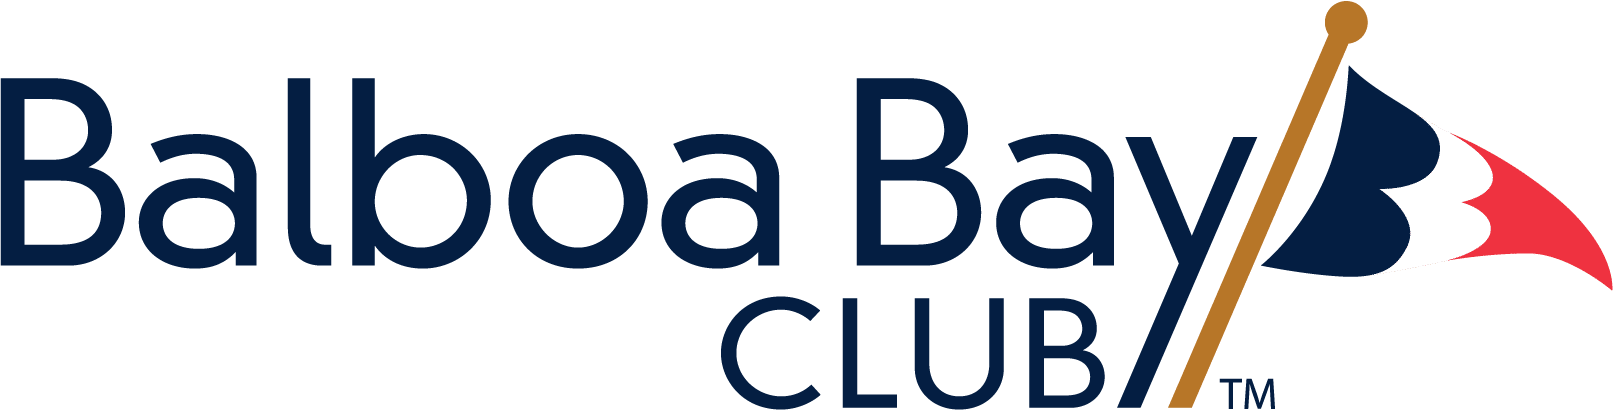 Balboa bay club logo